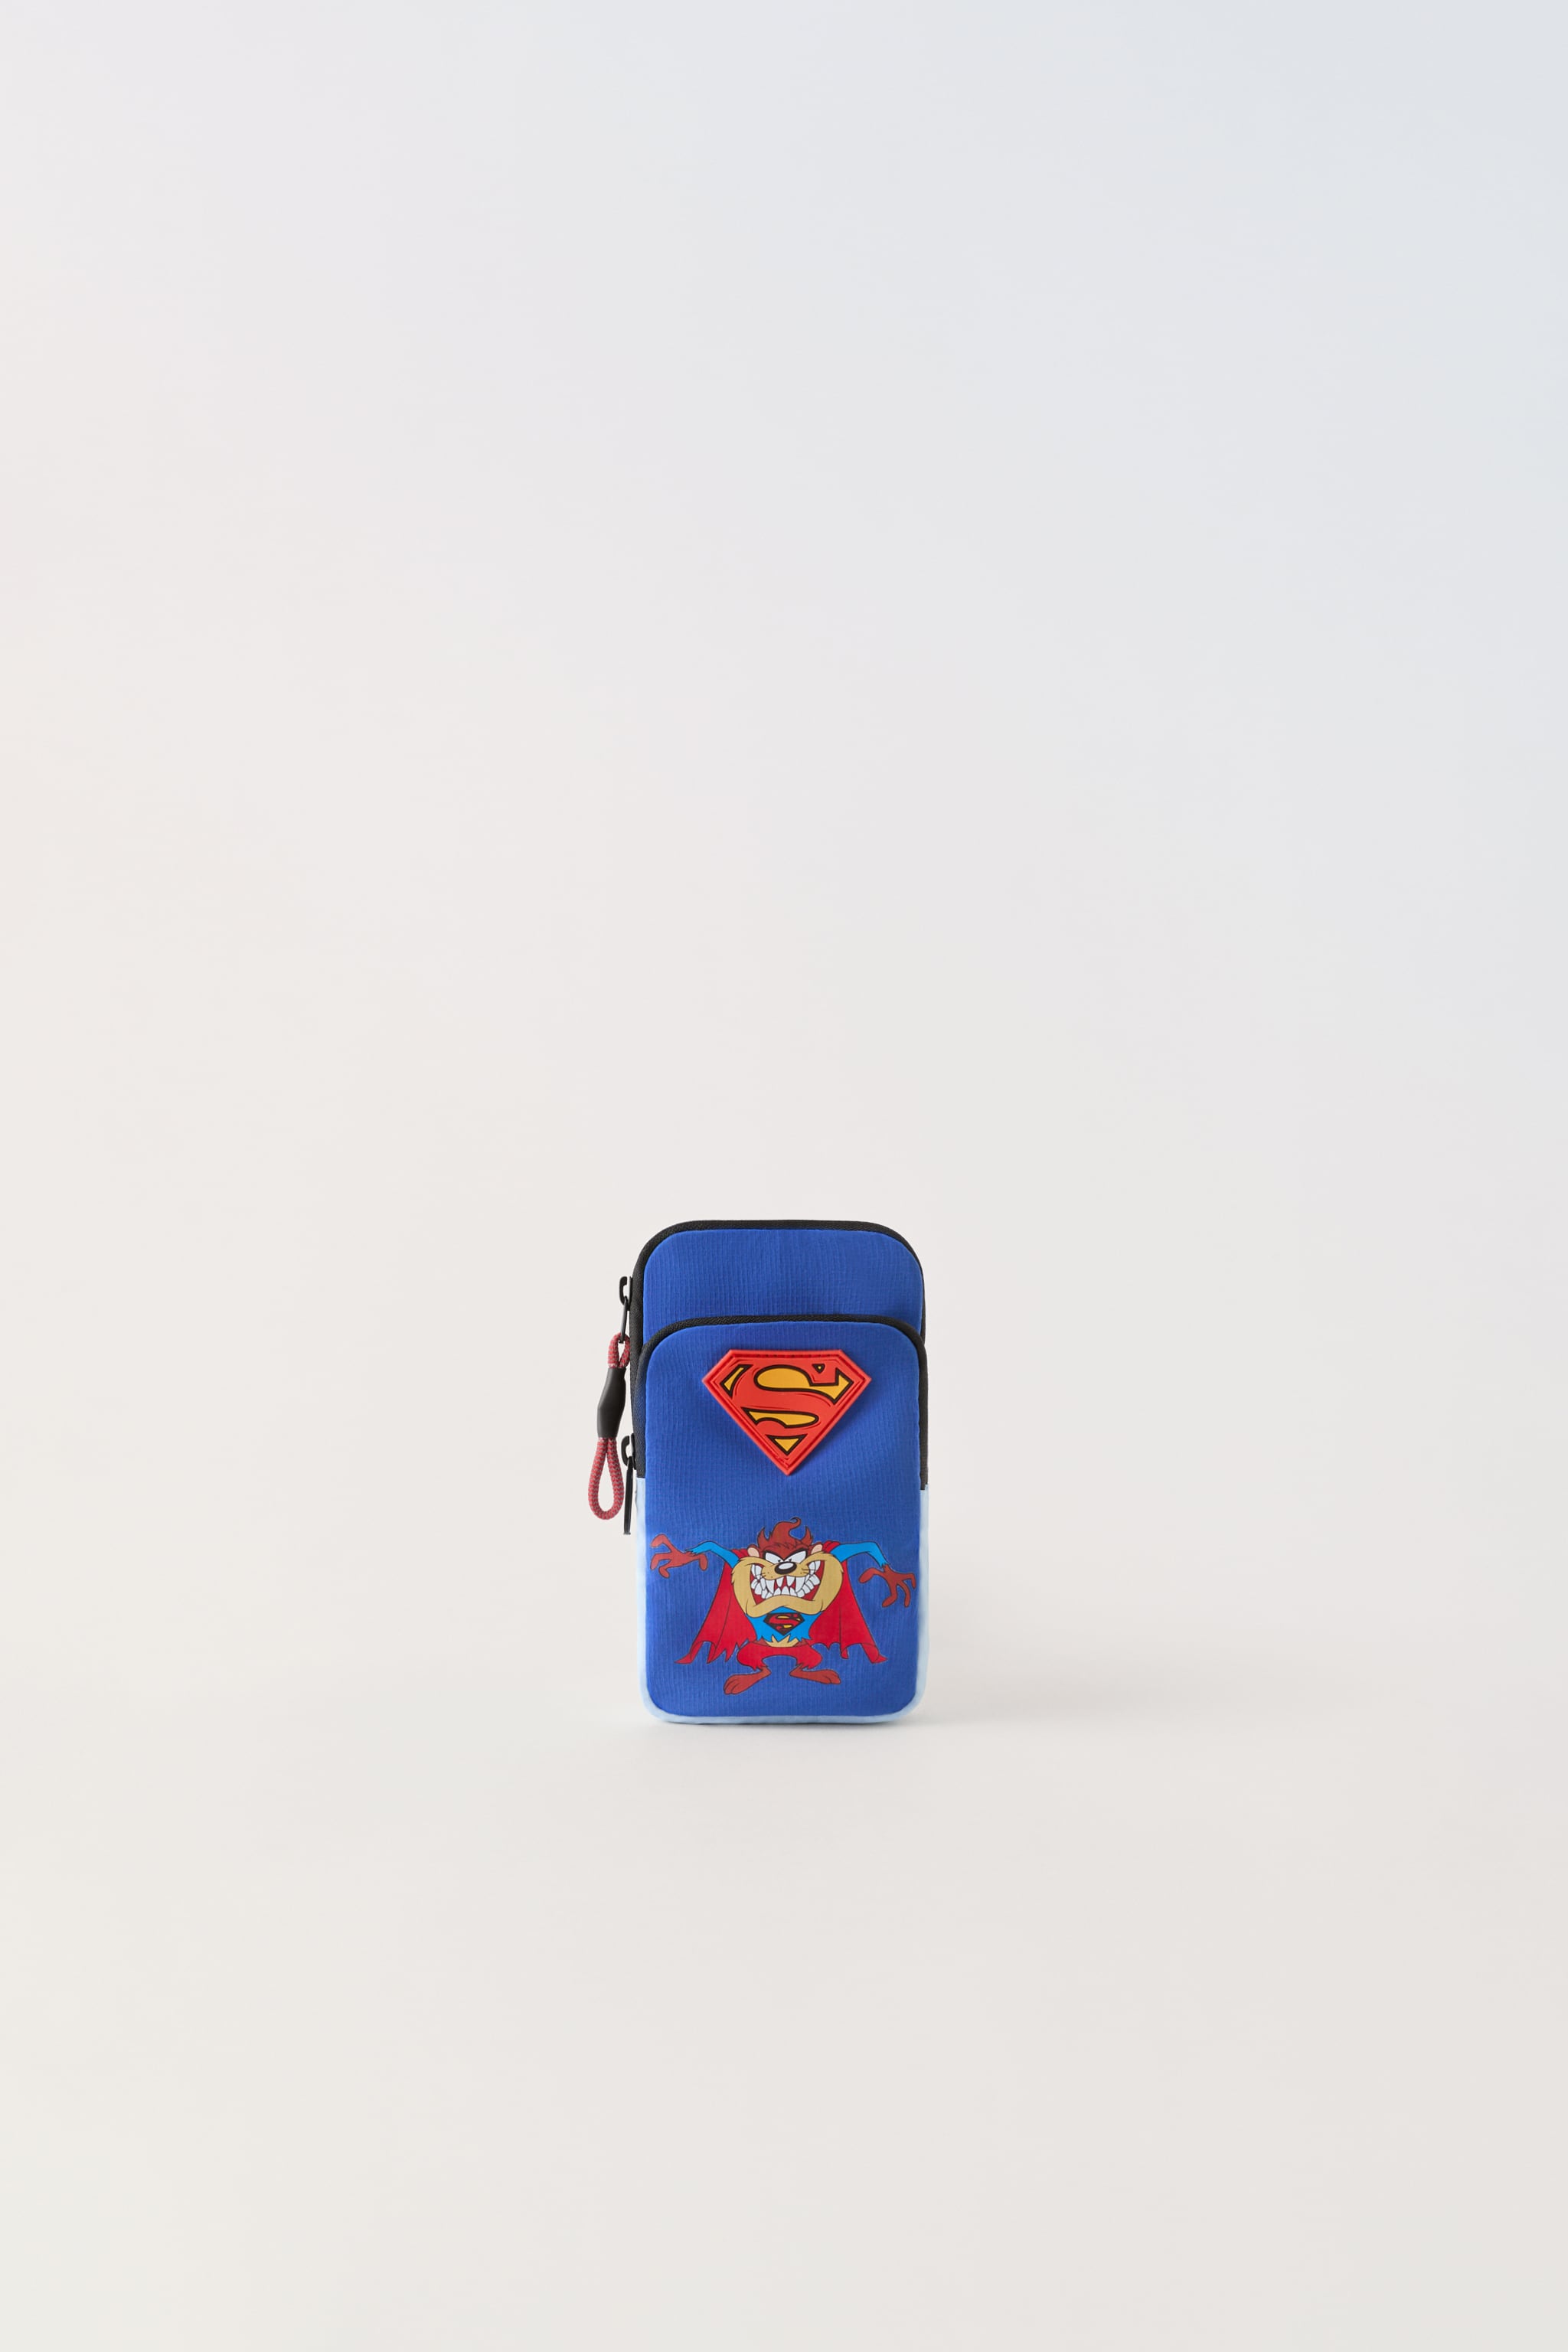 TAZ X SUPERMAN ™ LOONEY TUNES CELL PHONE CASE